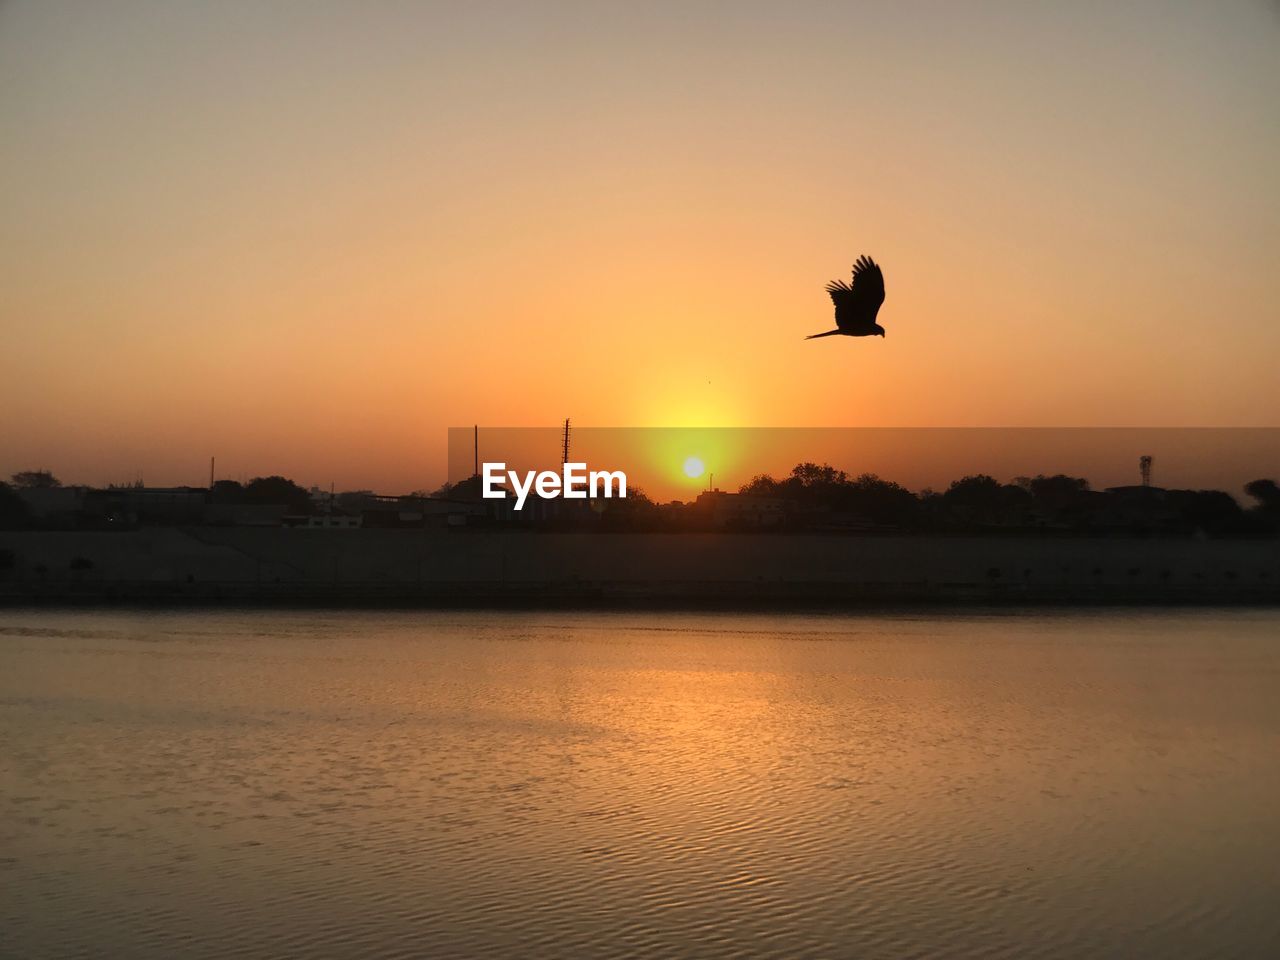 SILHOUETTE BIRD FLYING OVER LAKE AGAINST SKY AT SUNSET